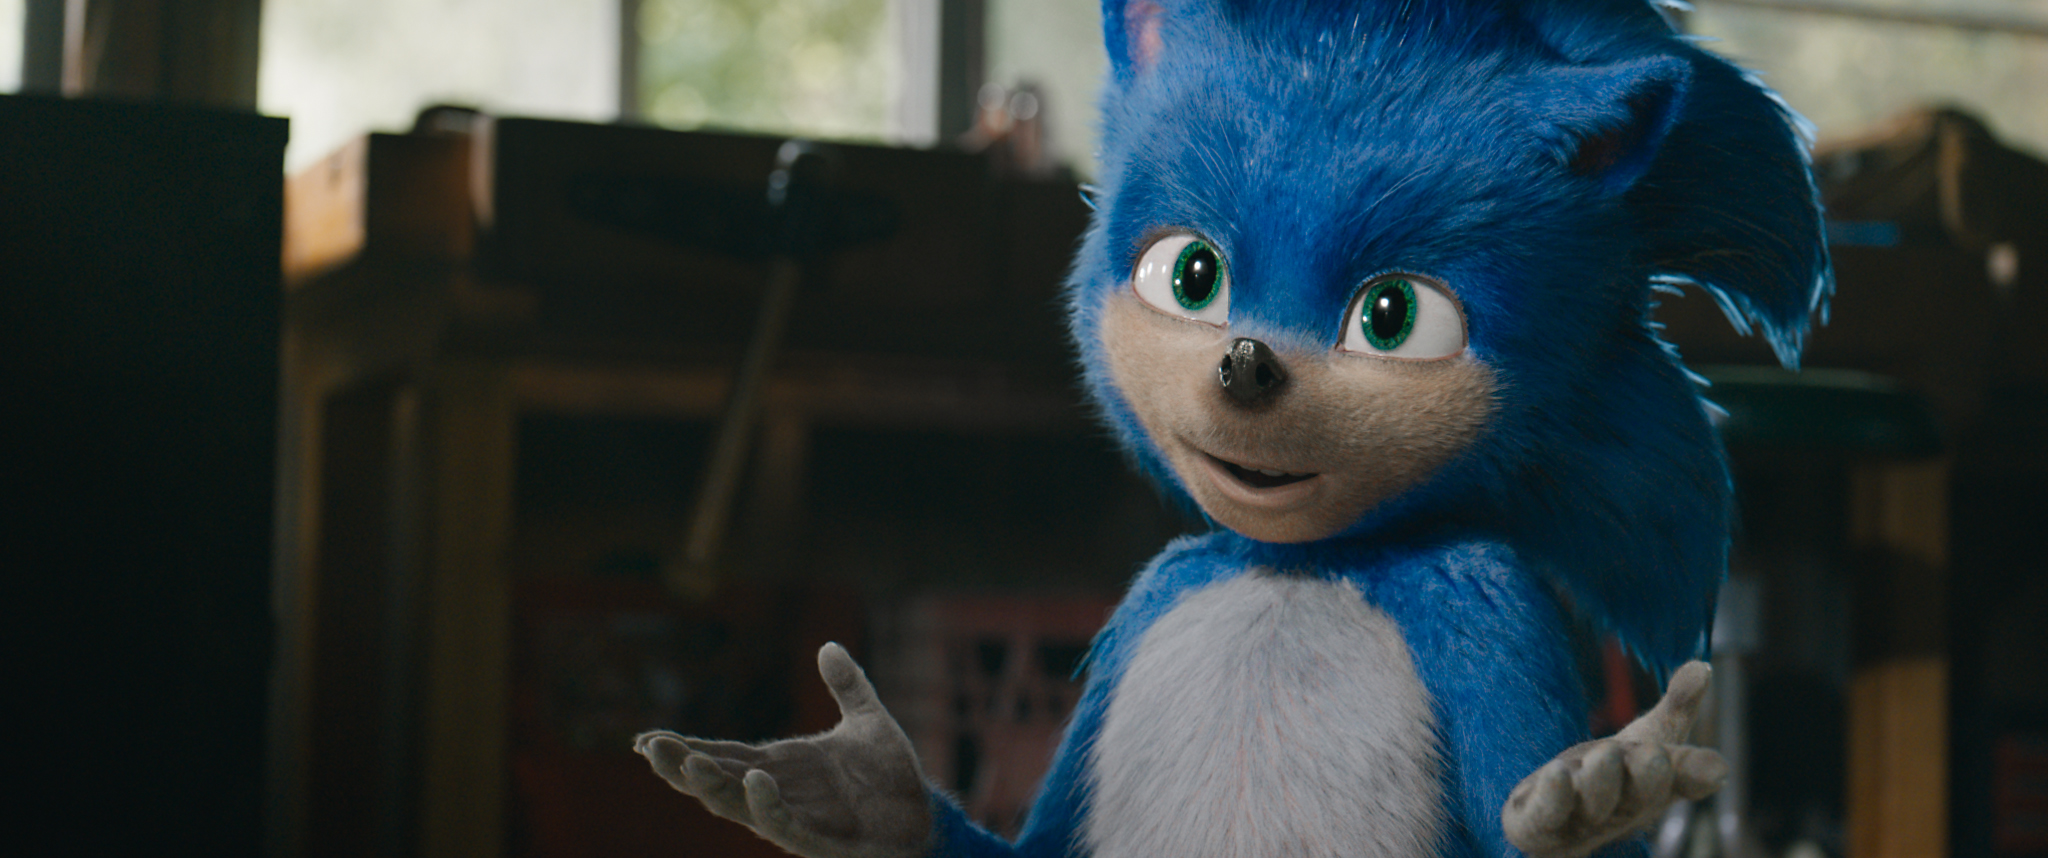 Sonic The Hedgehog To Get Major Redesign After Fan Complaints